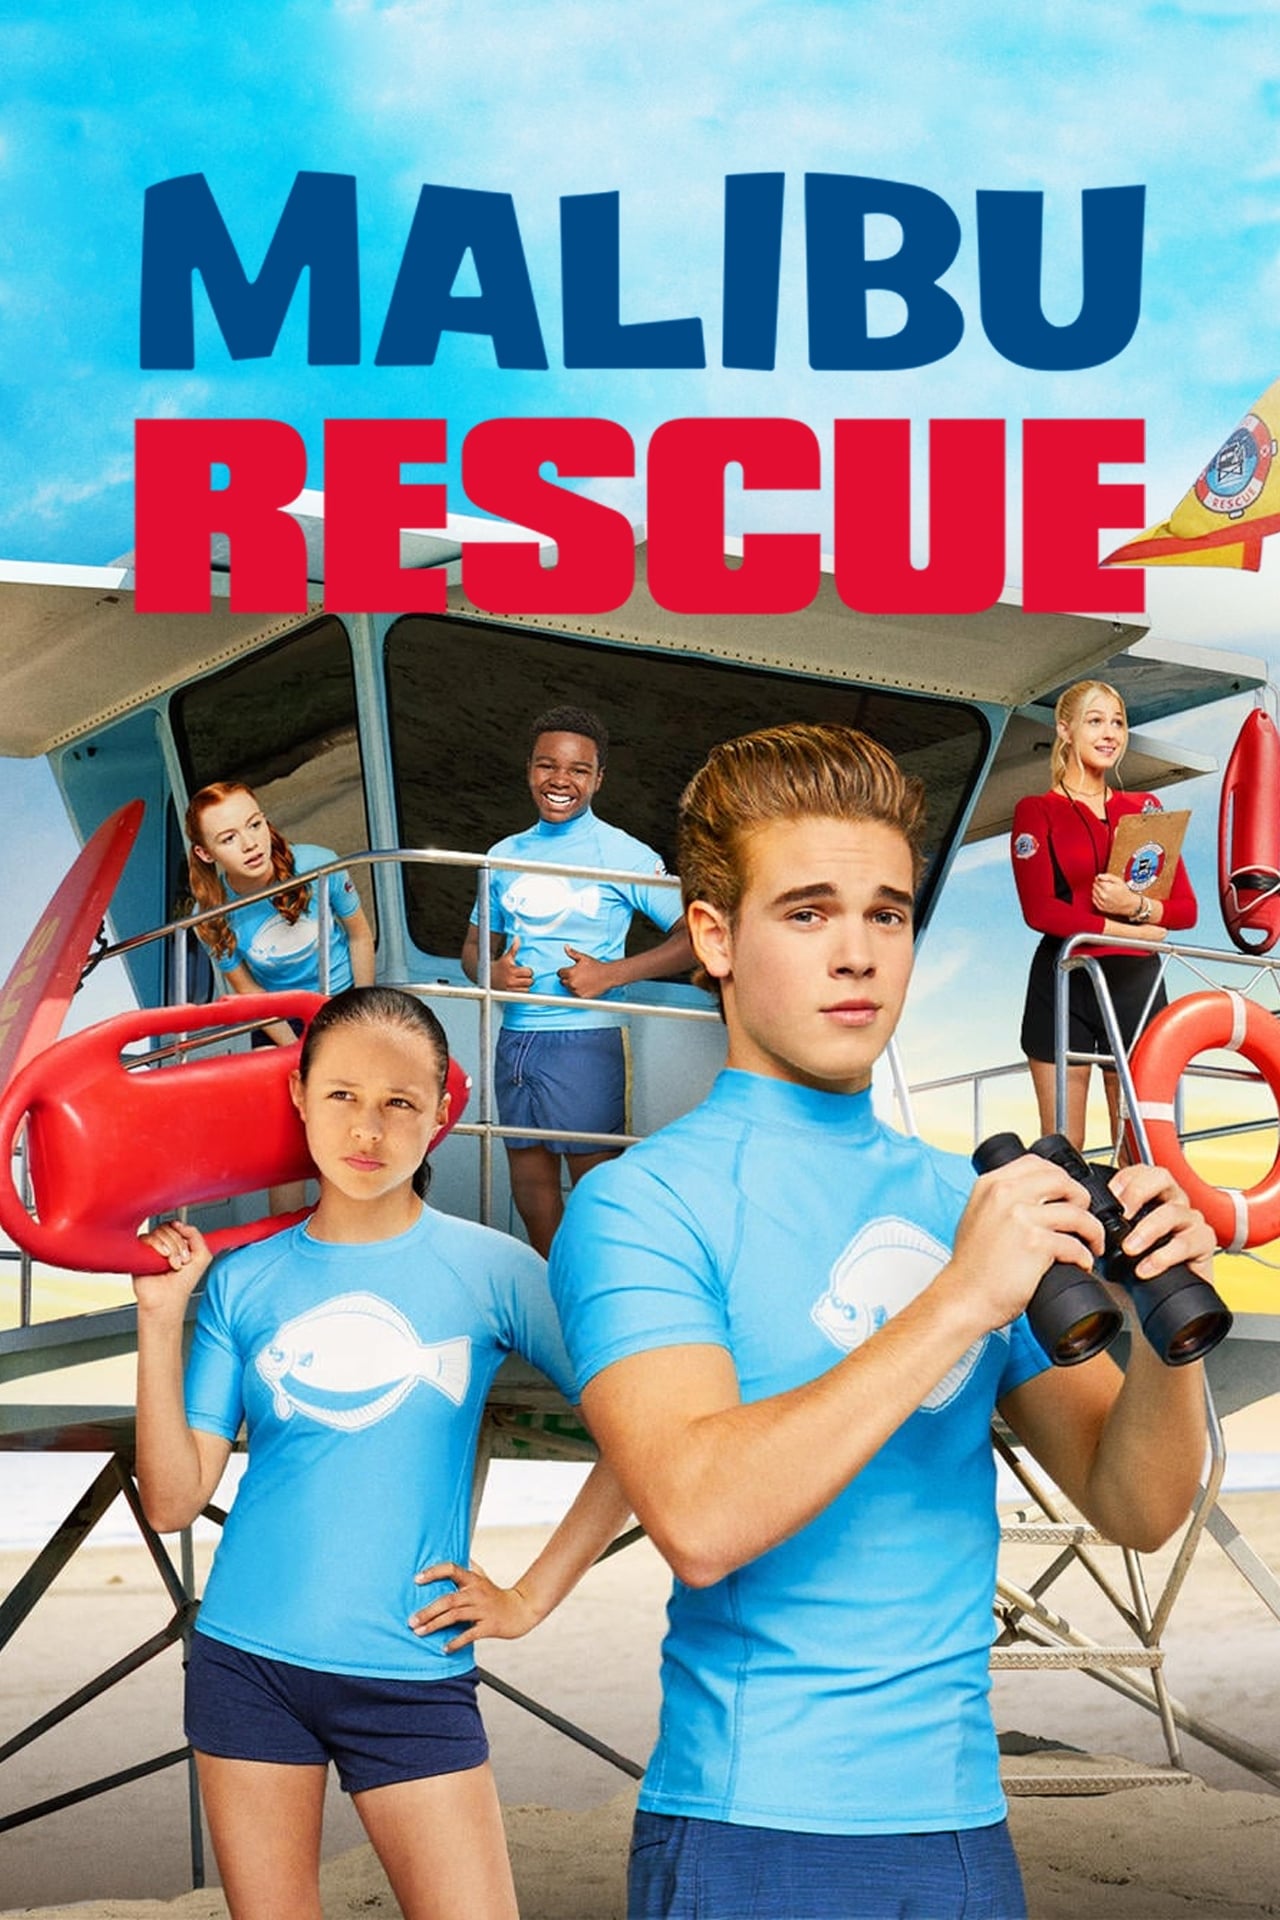 Malibu Rescue [HD] (2019)